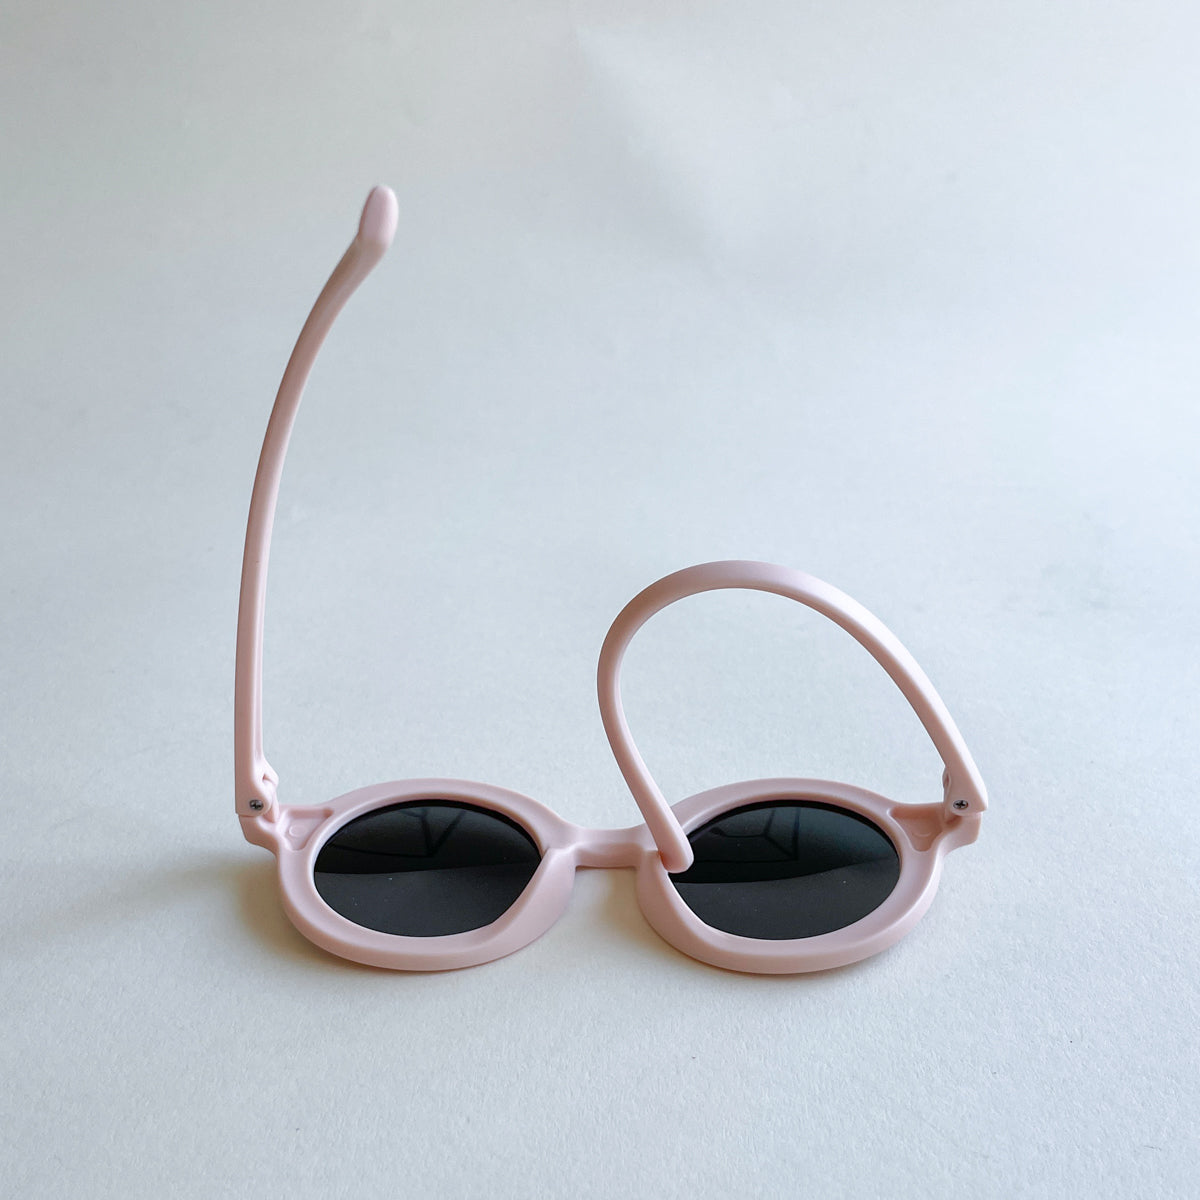 New Flexible, Resistant & Polarized UV 400 Kids Sunglasses Blush Pink